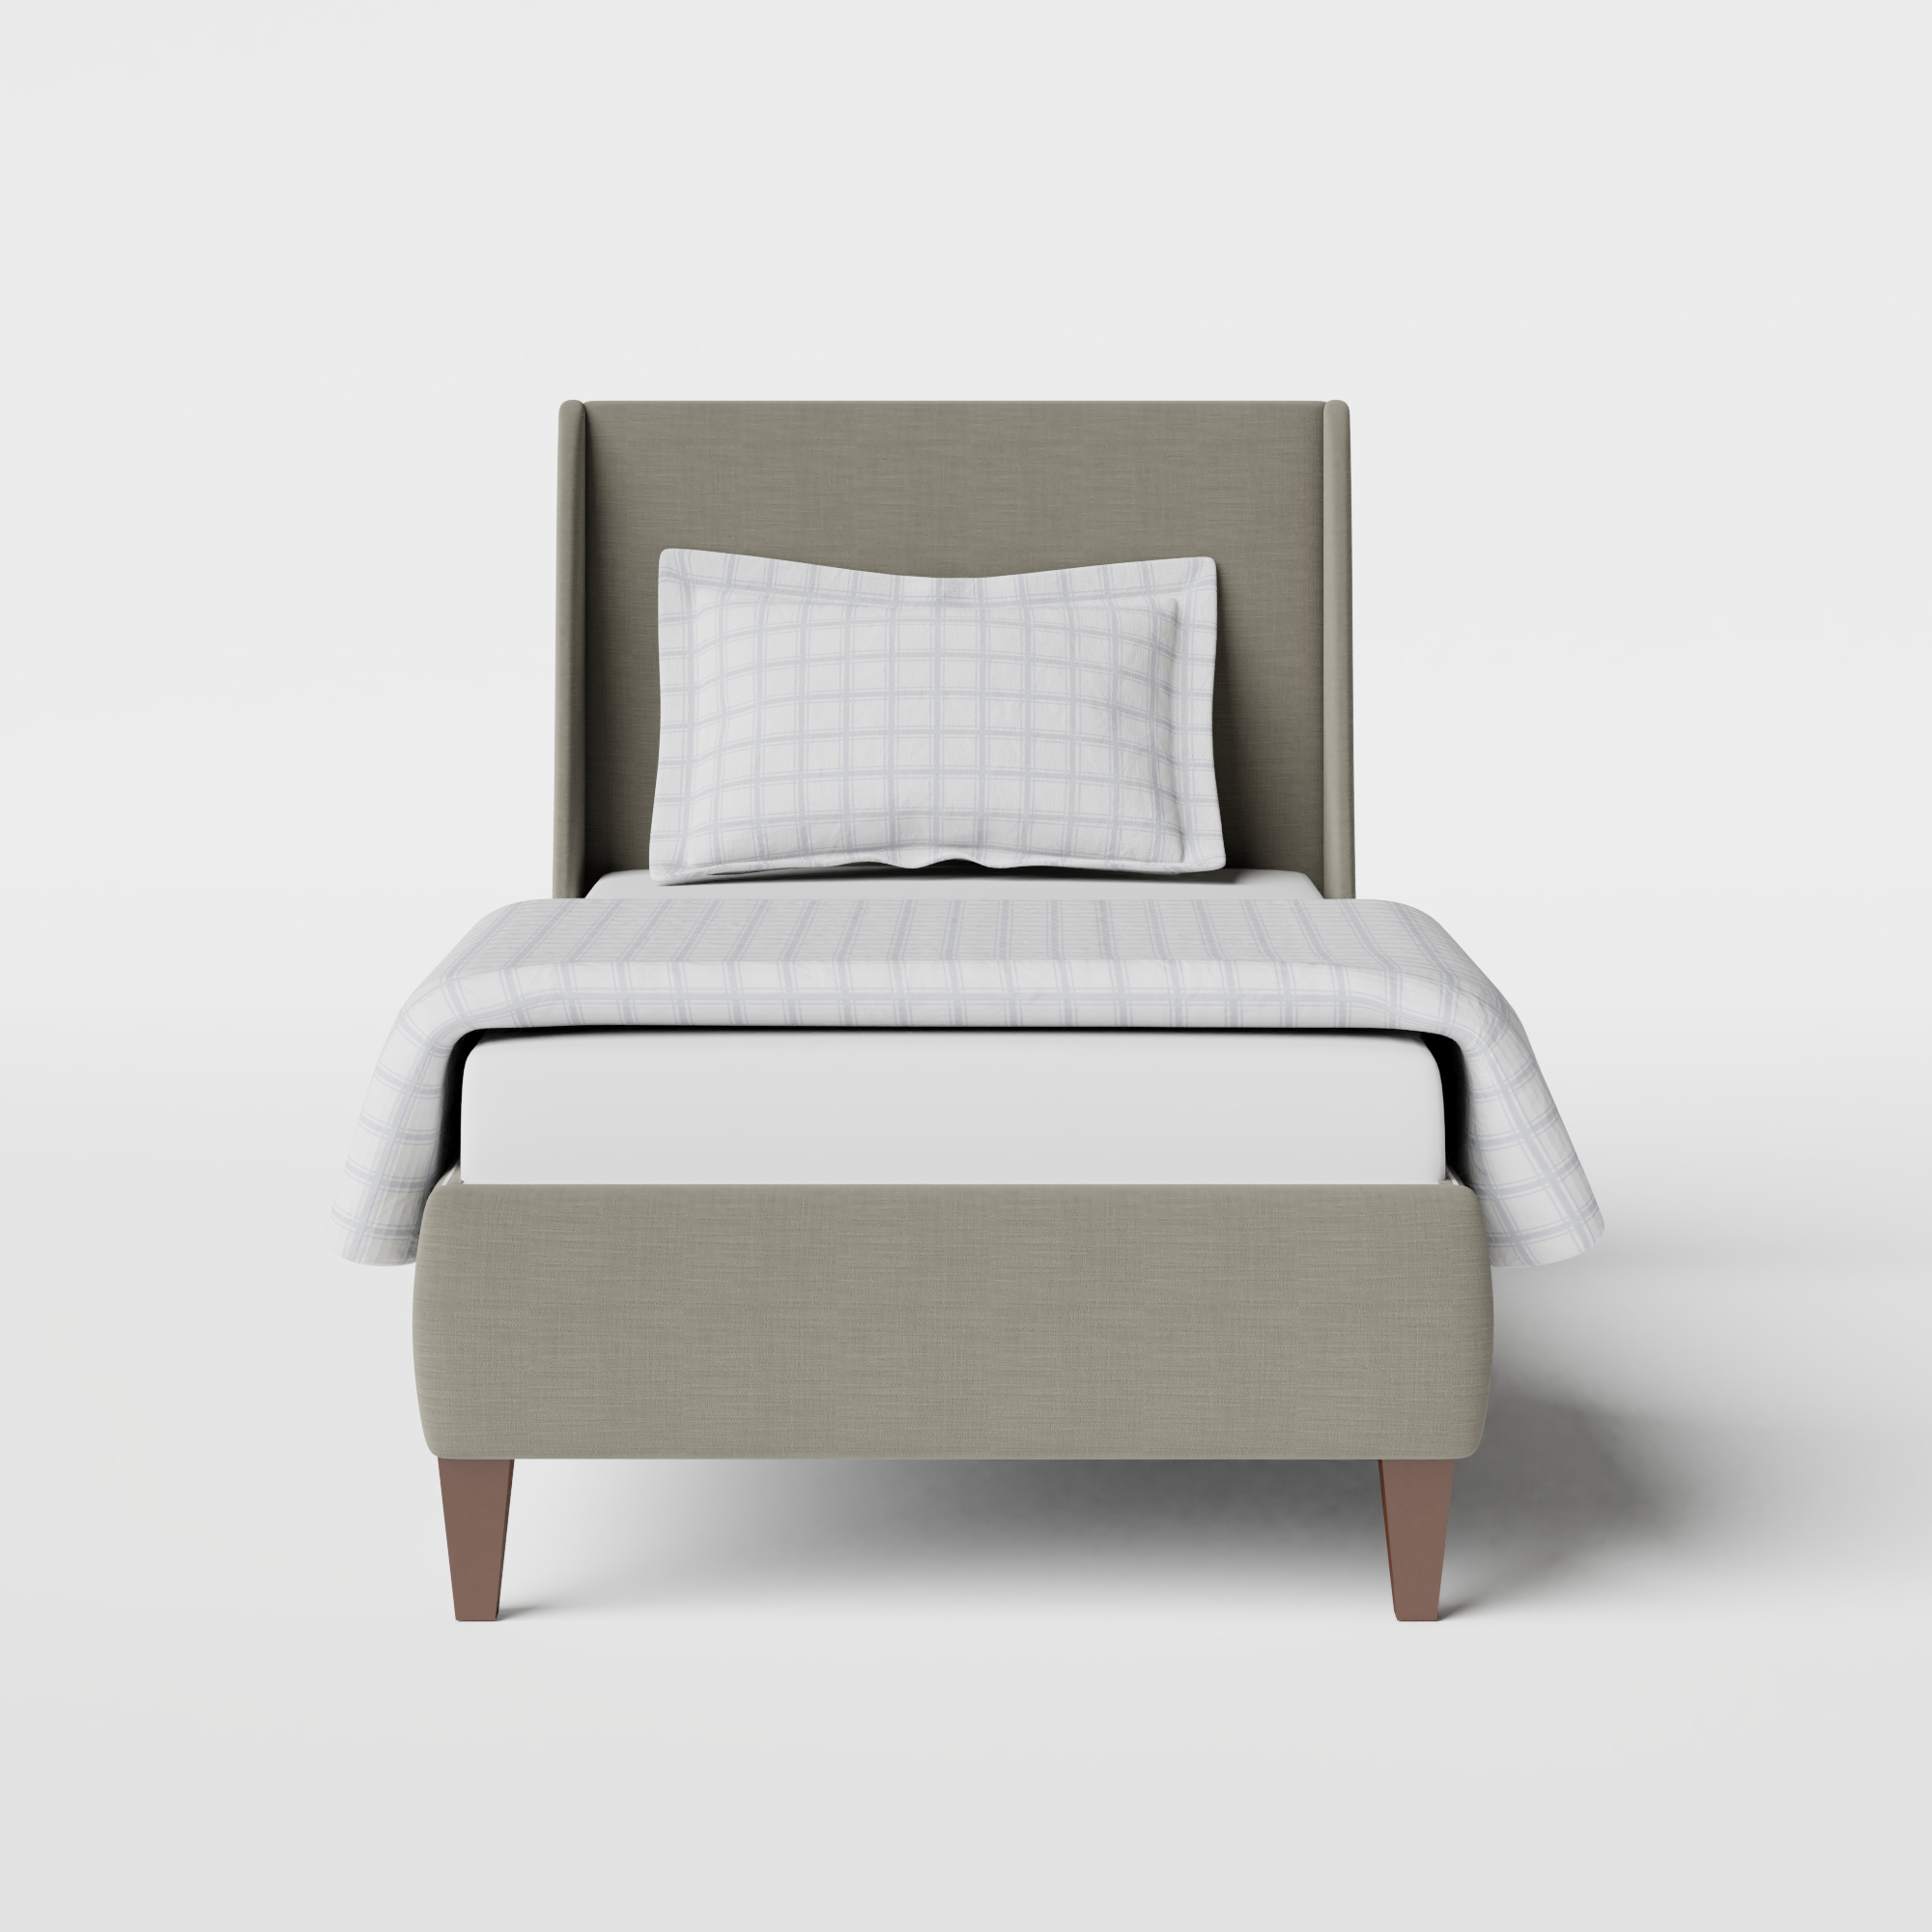 Sunderland upholstered single bed in grey fabric